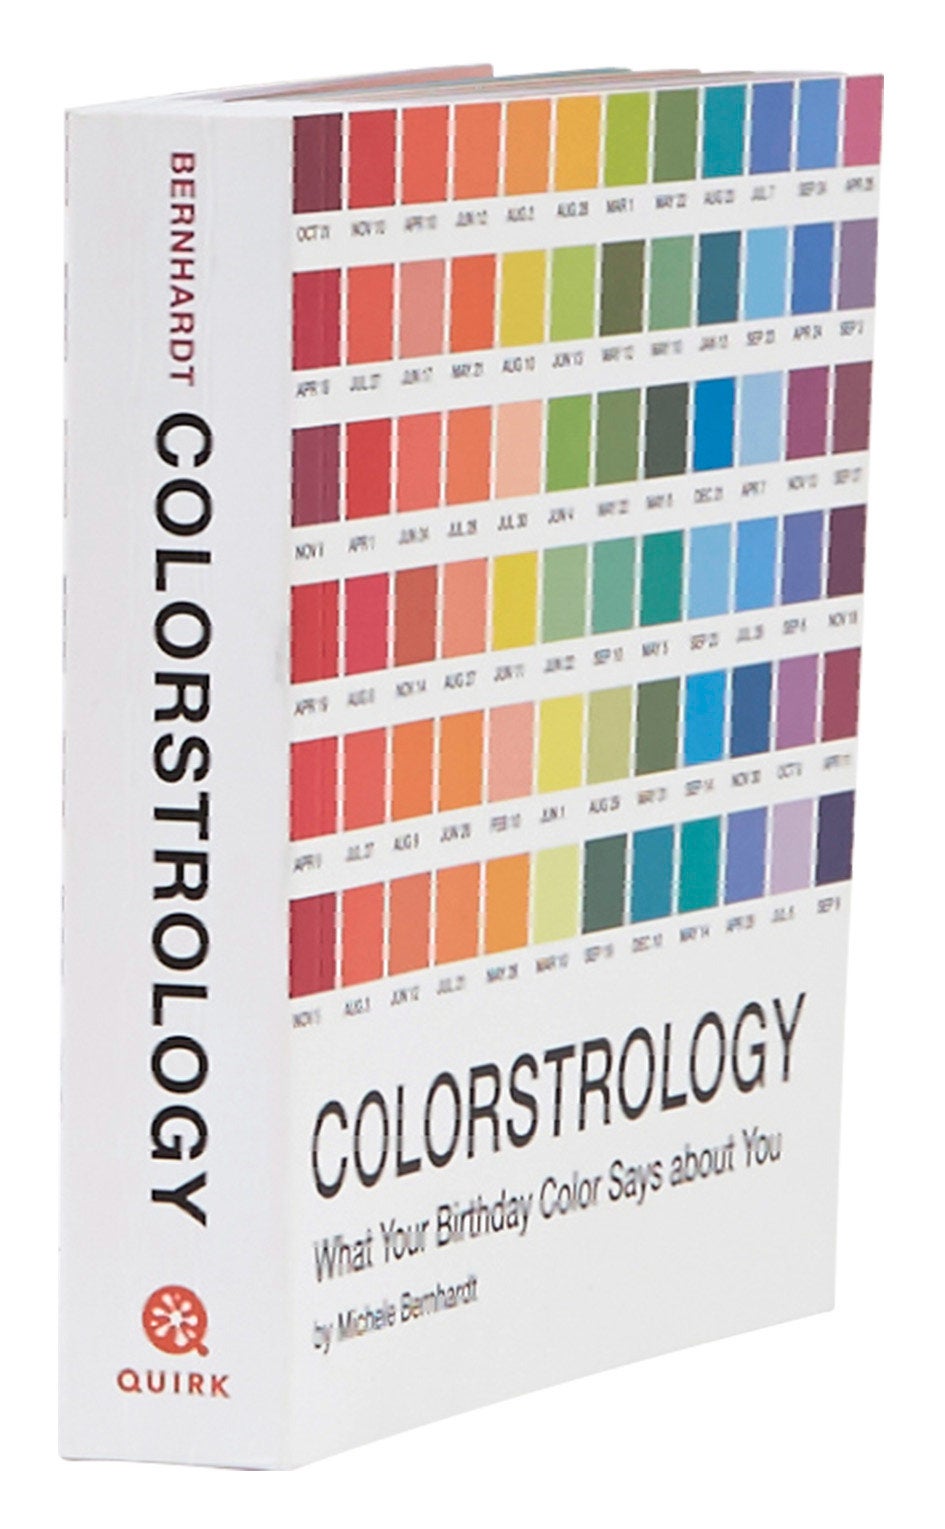 colorstrology birthday pdf